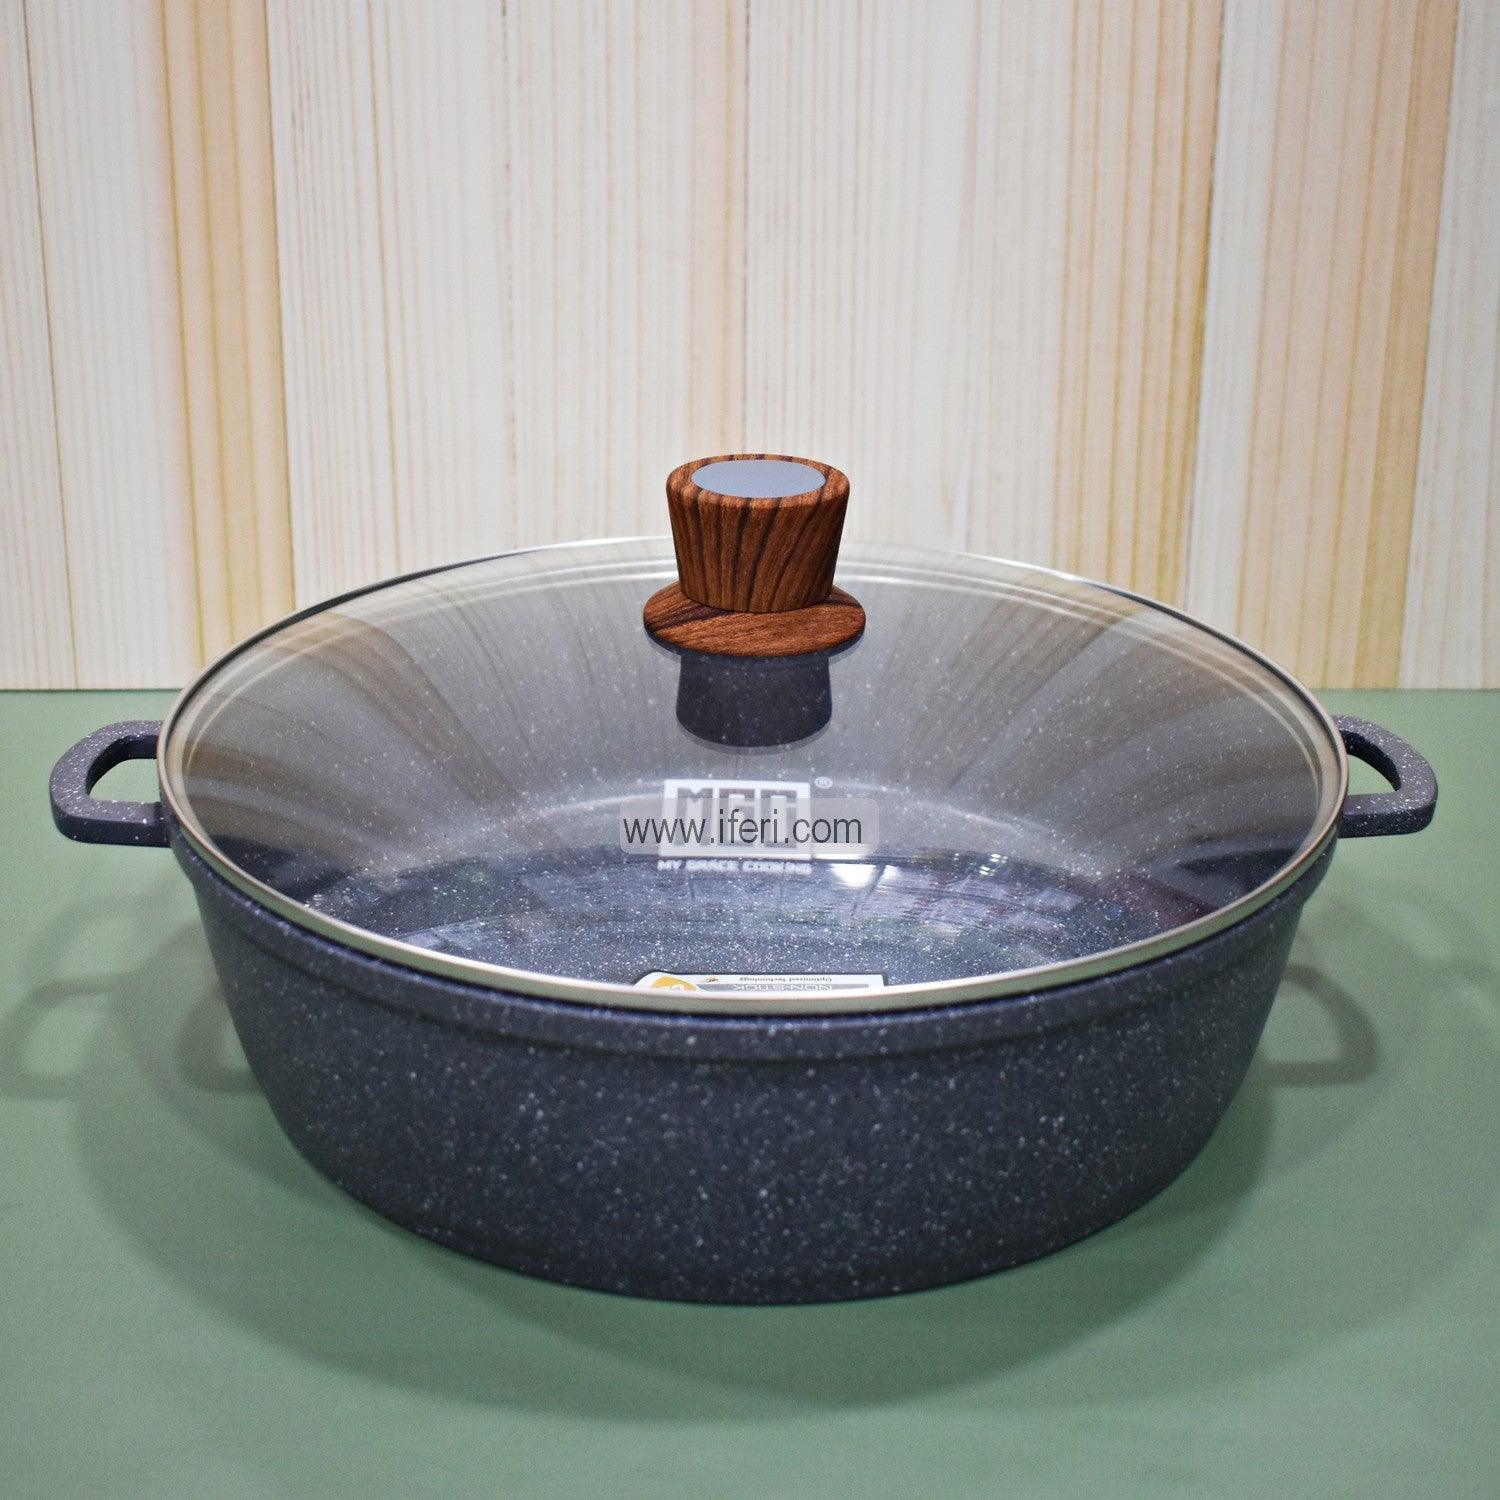 40 cm MGC Non Stick Granite Coated Cookware With Lid GDO8924 Price in Bangladesh - iferi.com